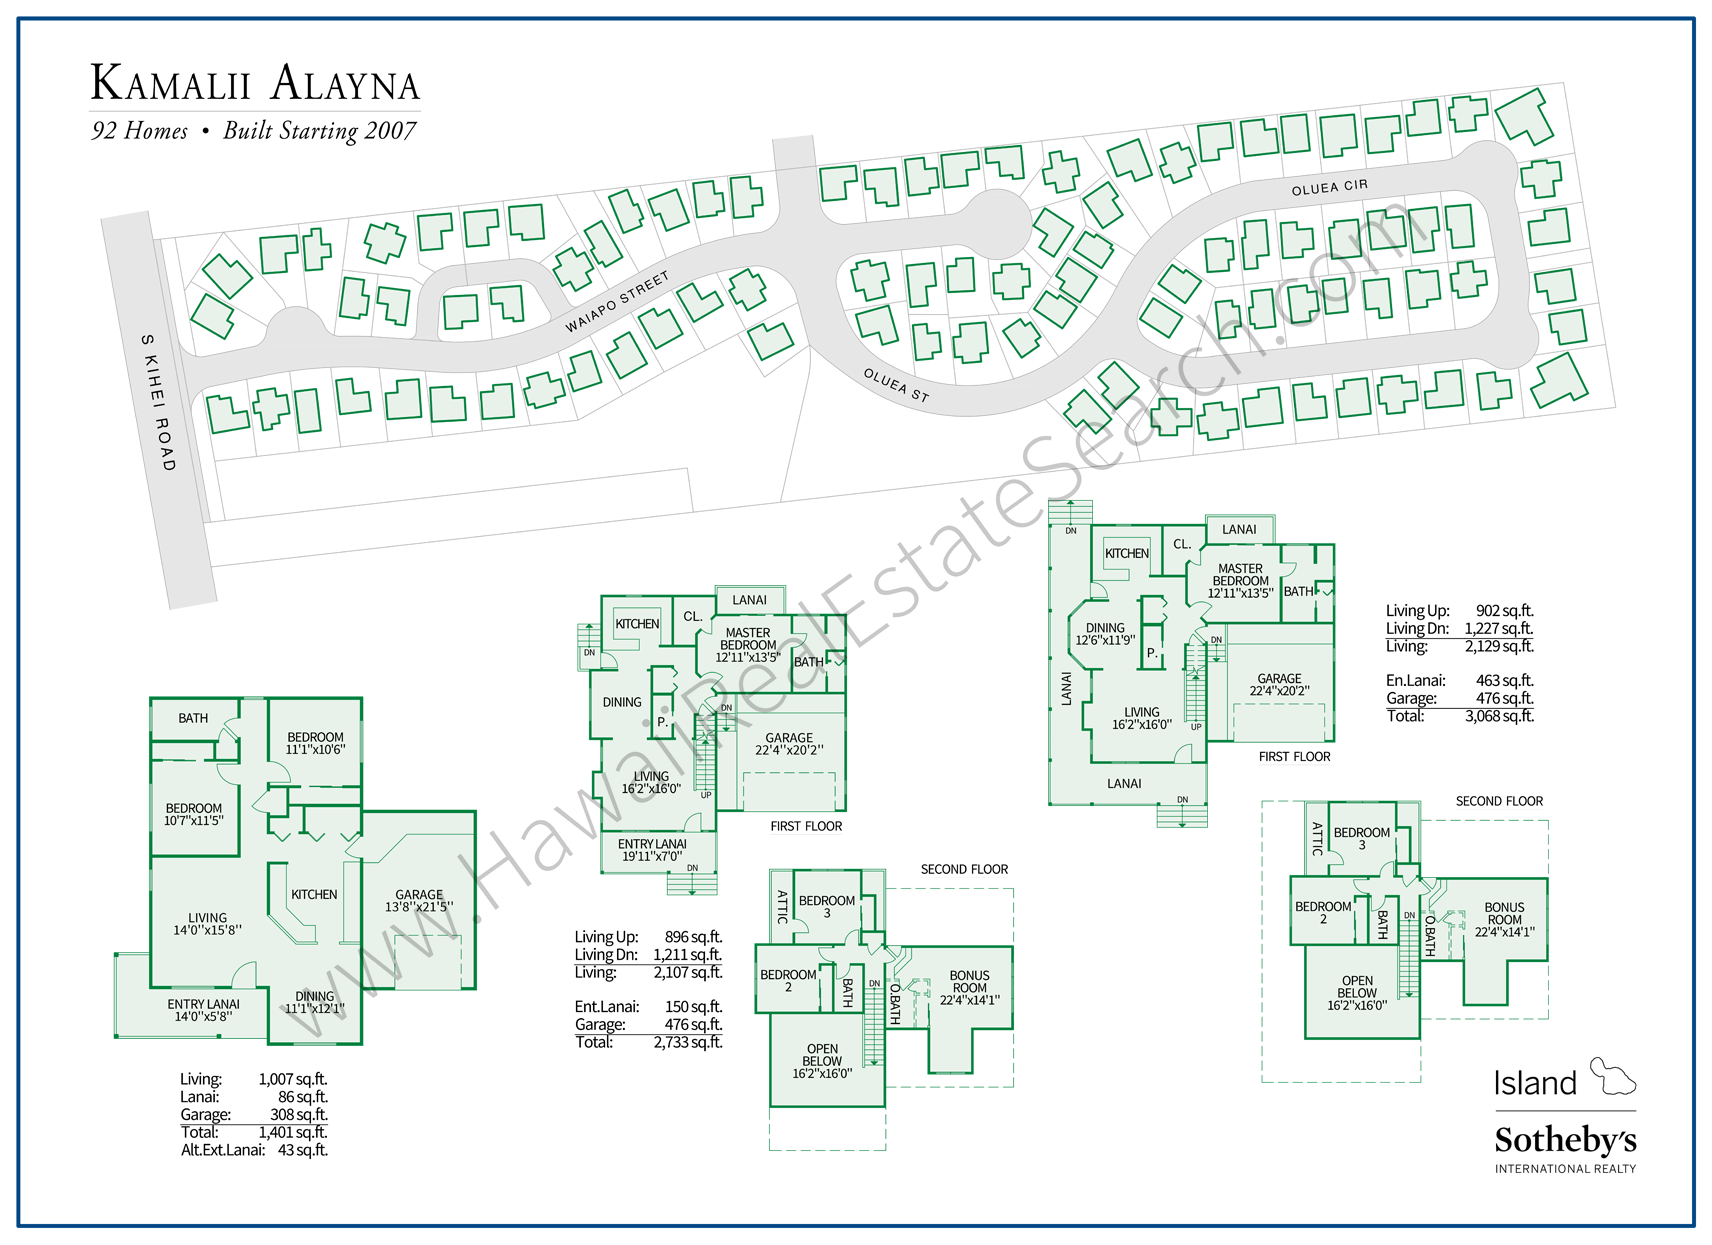 kamalii alayna map and floor plans